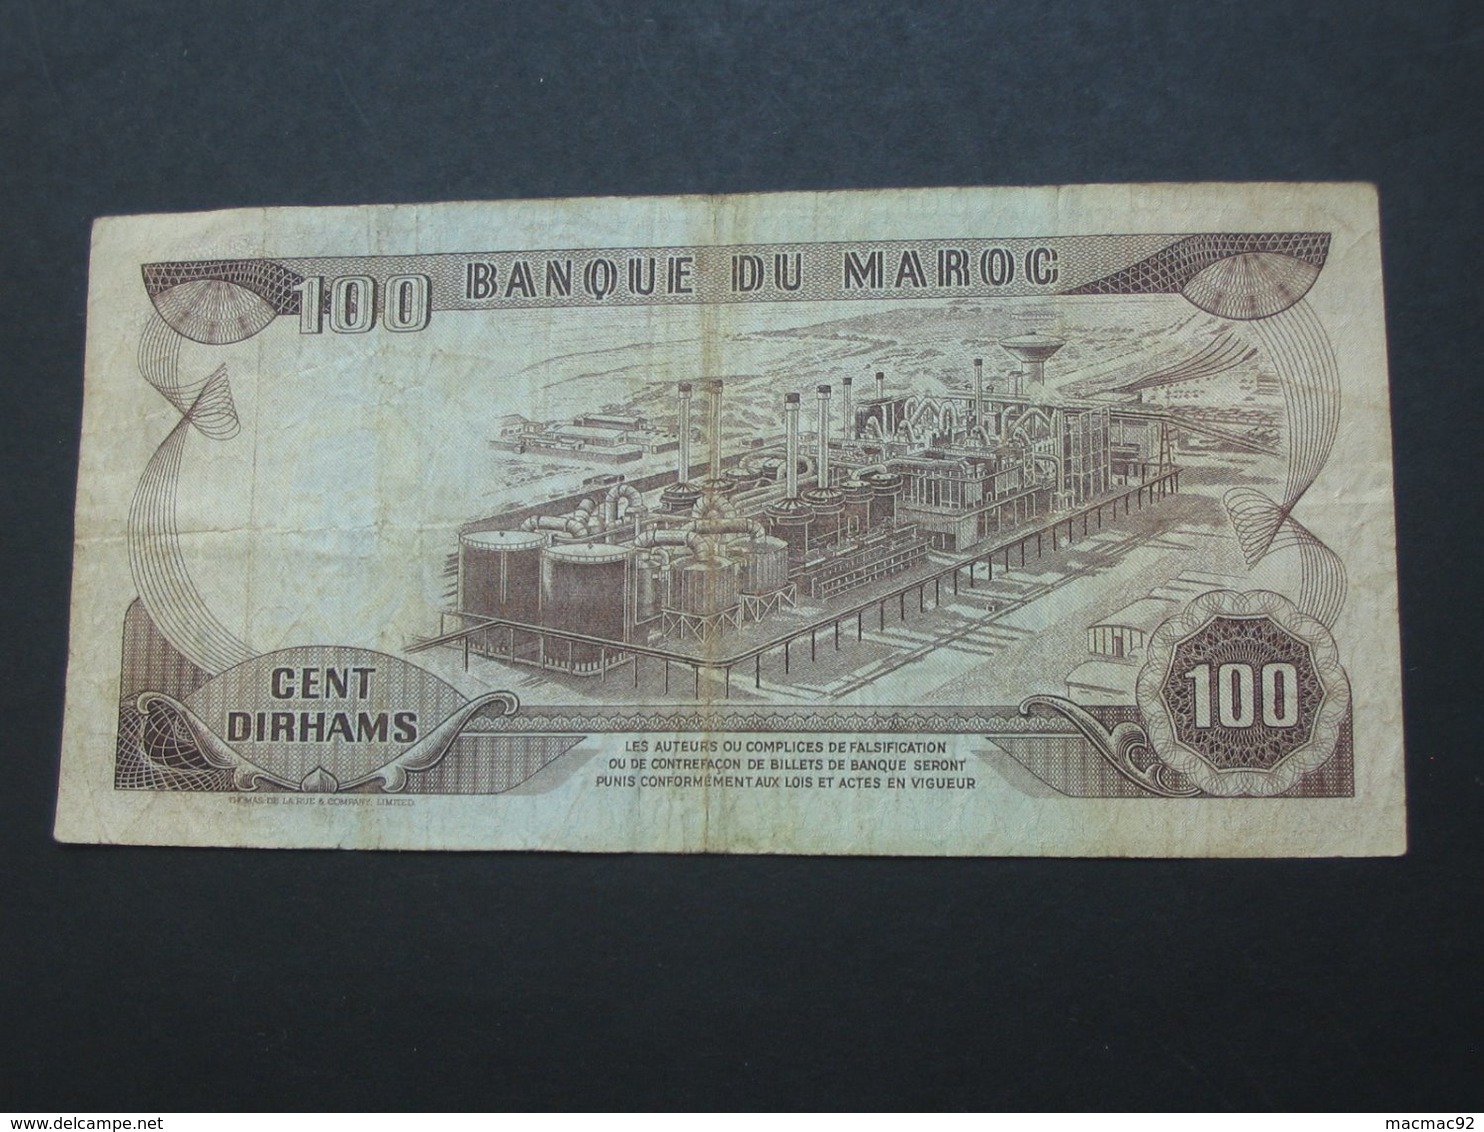 100 Dirhams 1970-1390 Maroc - Banque Du Maroc **** EN ACHAT IMMEDIAT **** - Morocco